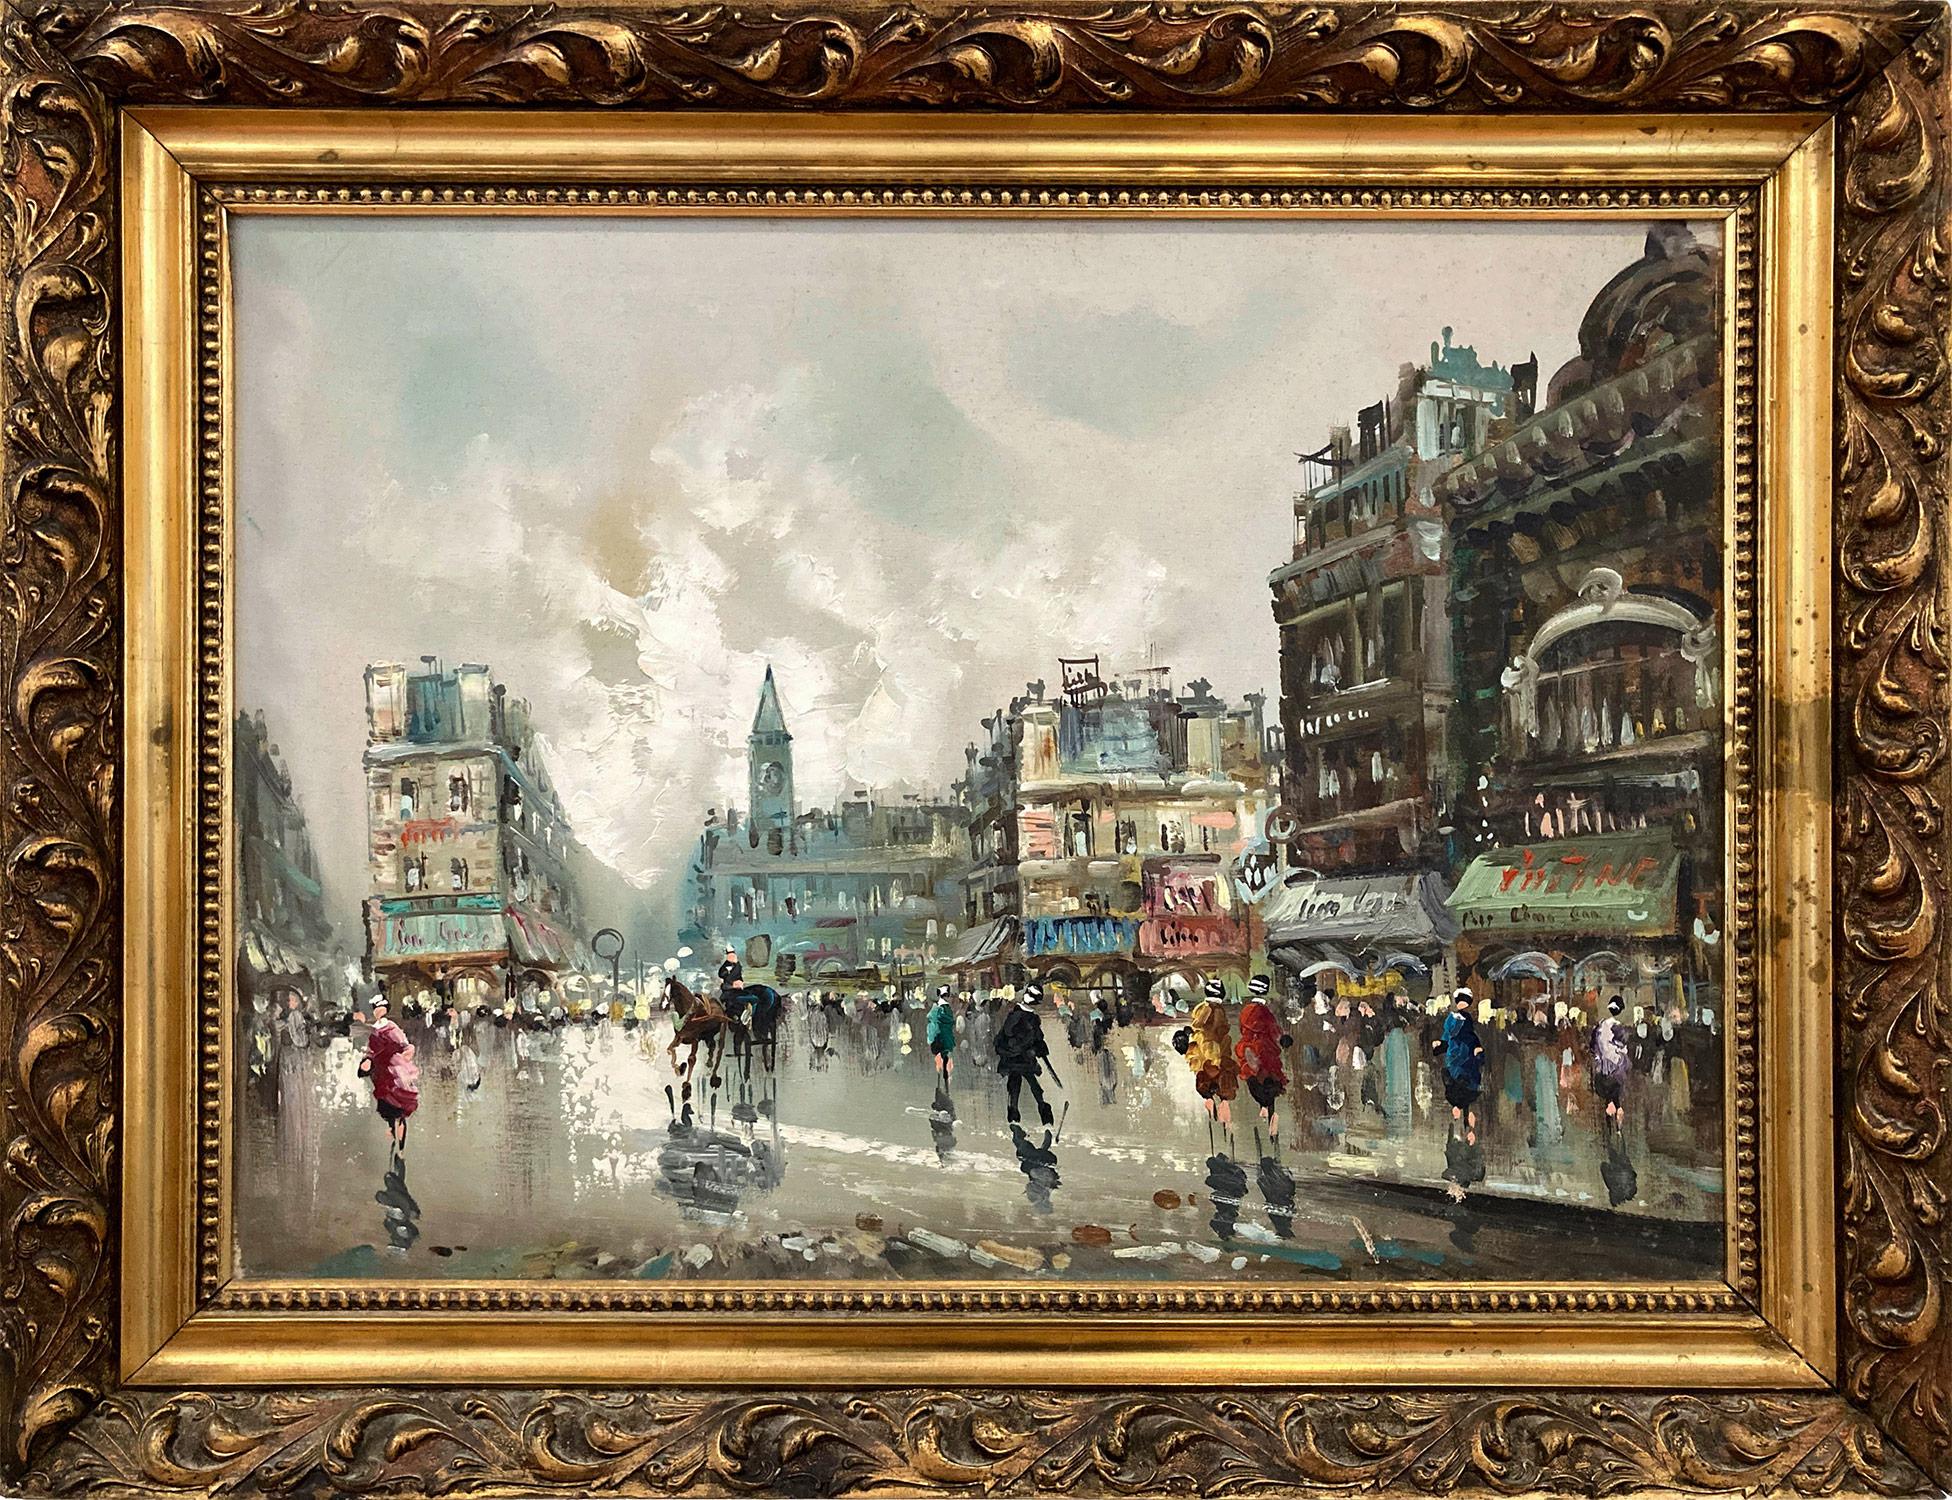 Antonio DeVity Figurative Painting - "Parisian Street Scene" Post-Impressionist Oil Painting on Canvas with Figures